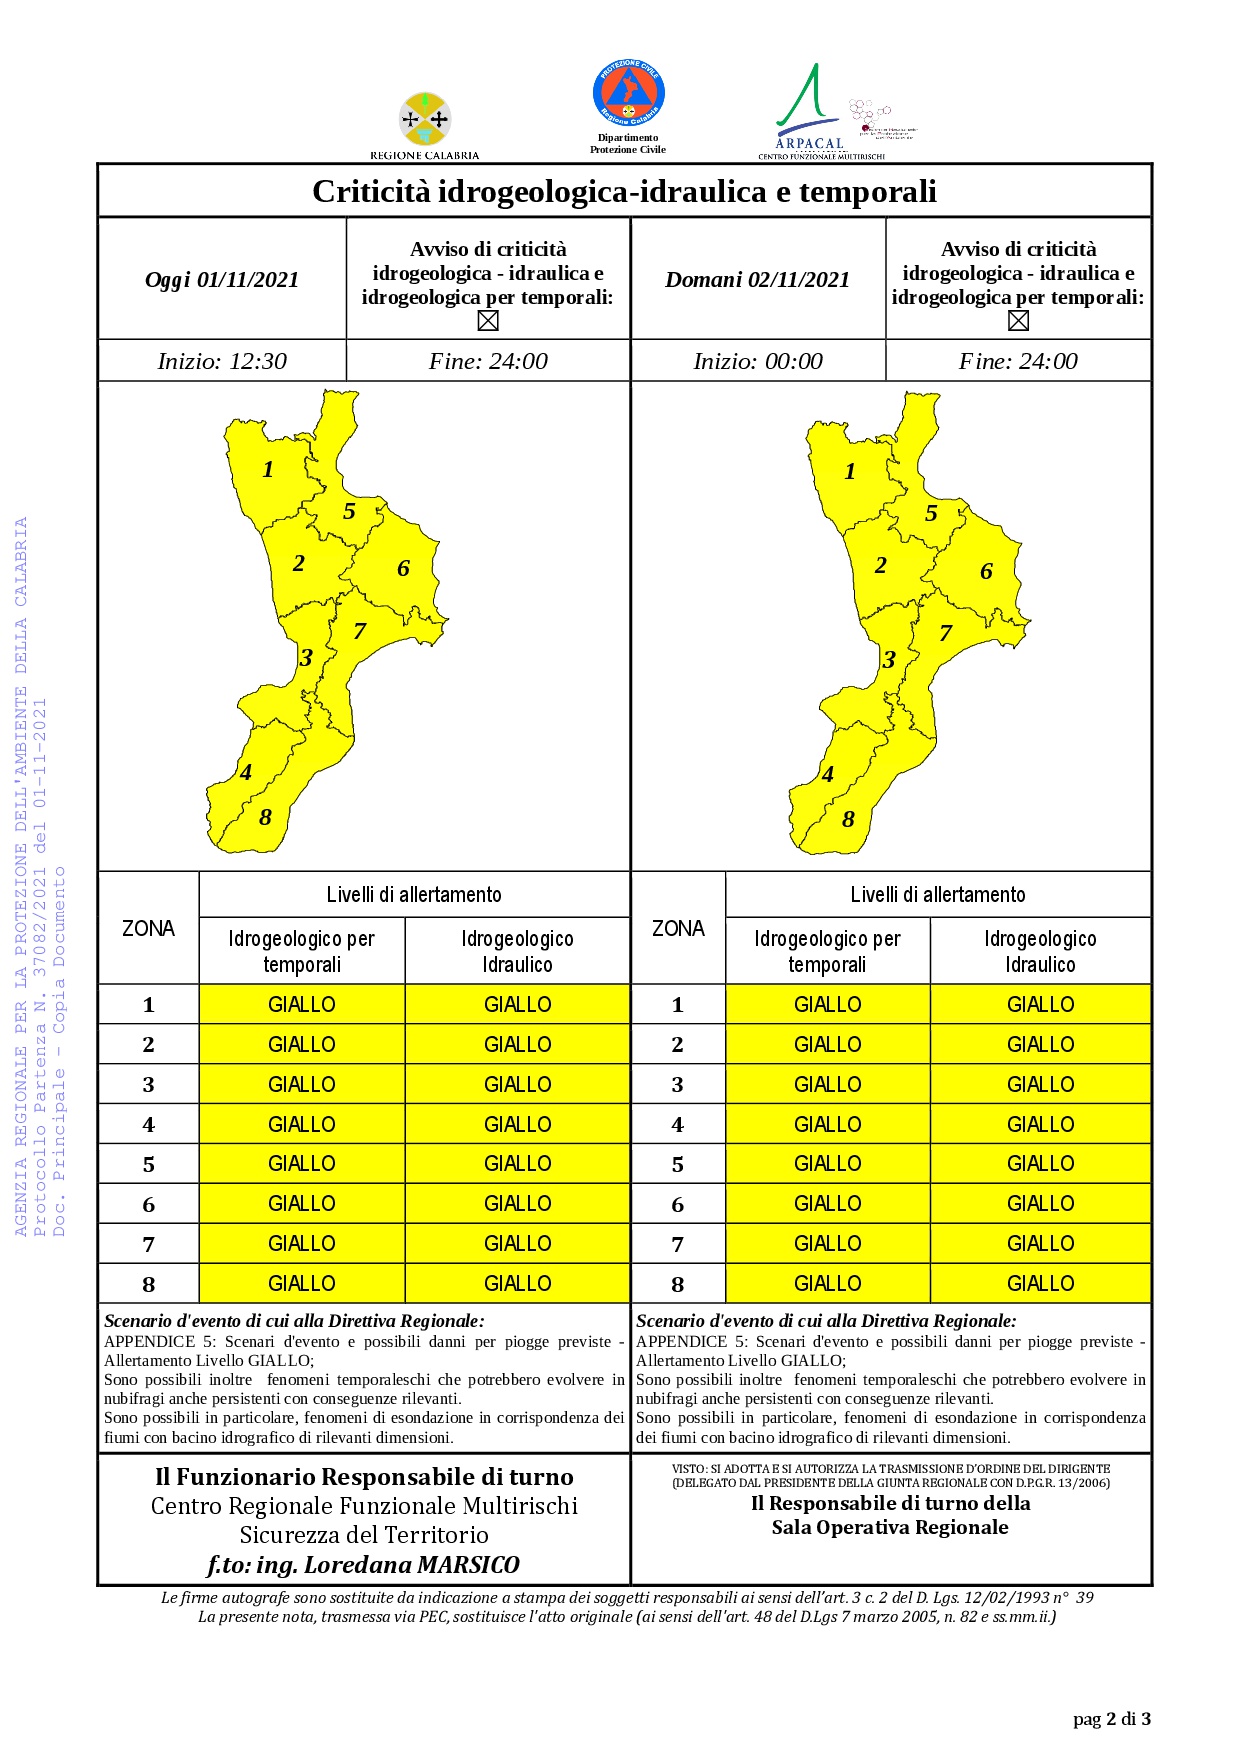 Criticità idrogeologica-idraulica e temporali in Calabria 01-11-2021